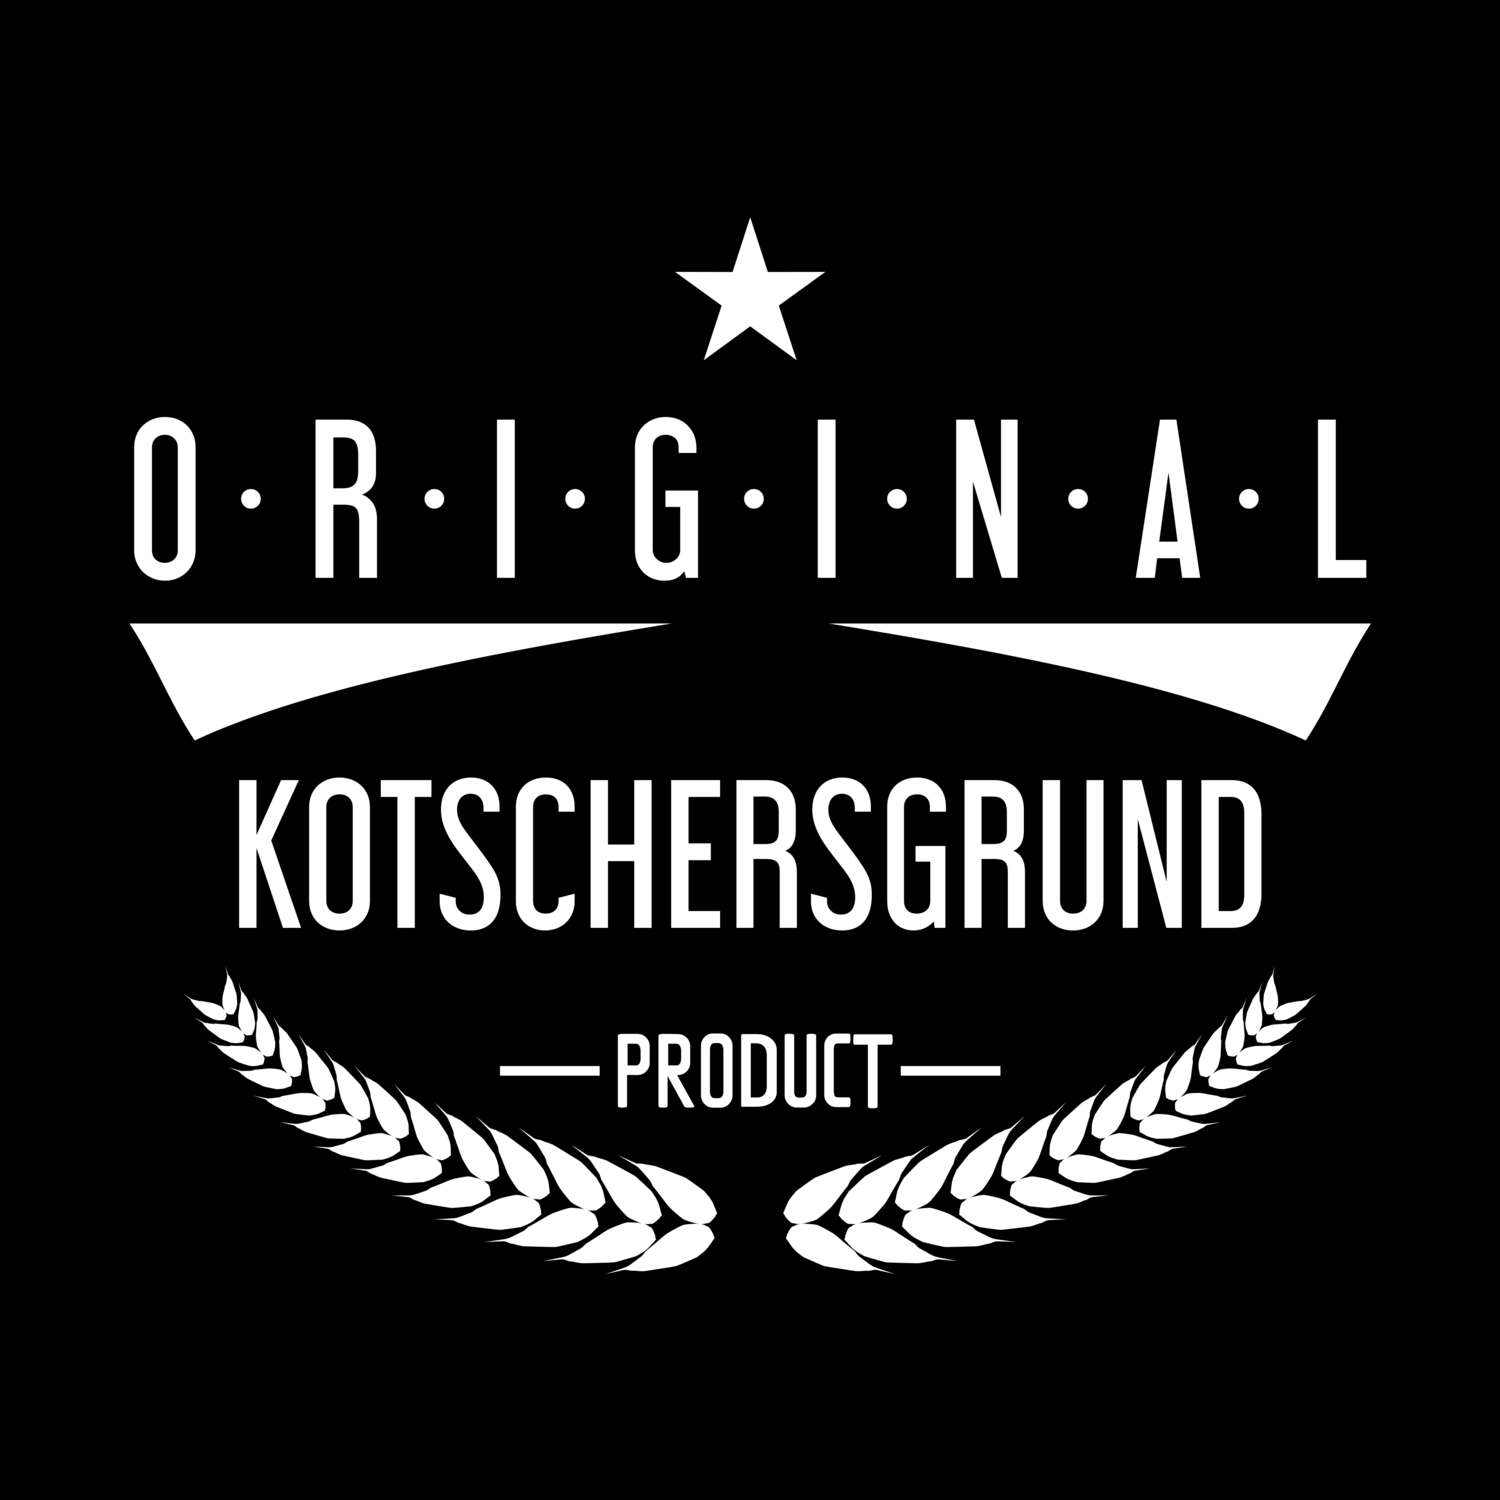 Kotschersgrund T-Shirt »Original Product«